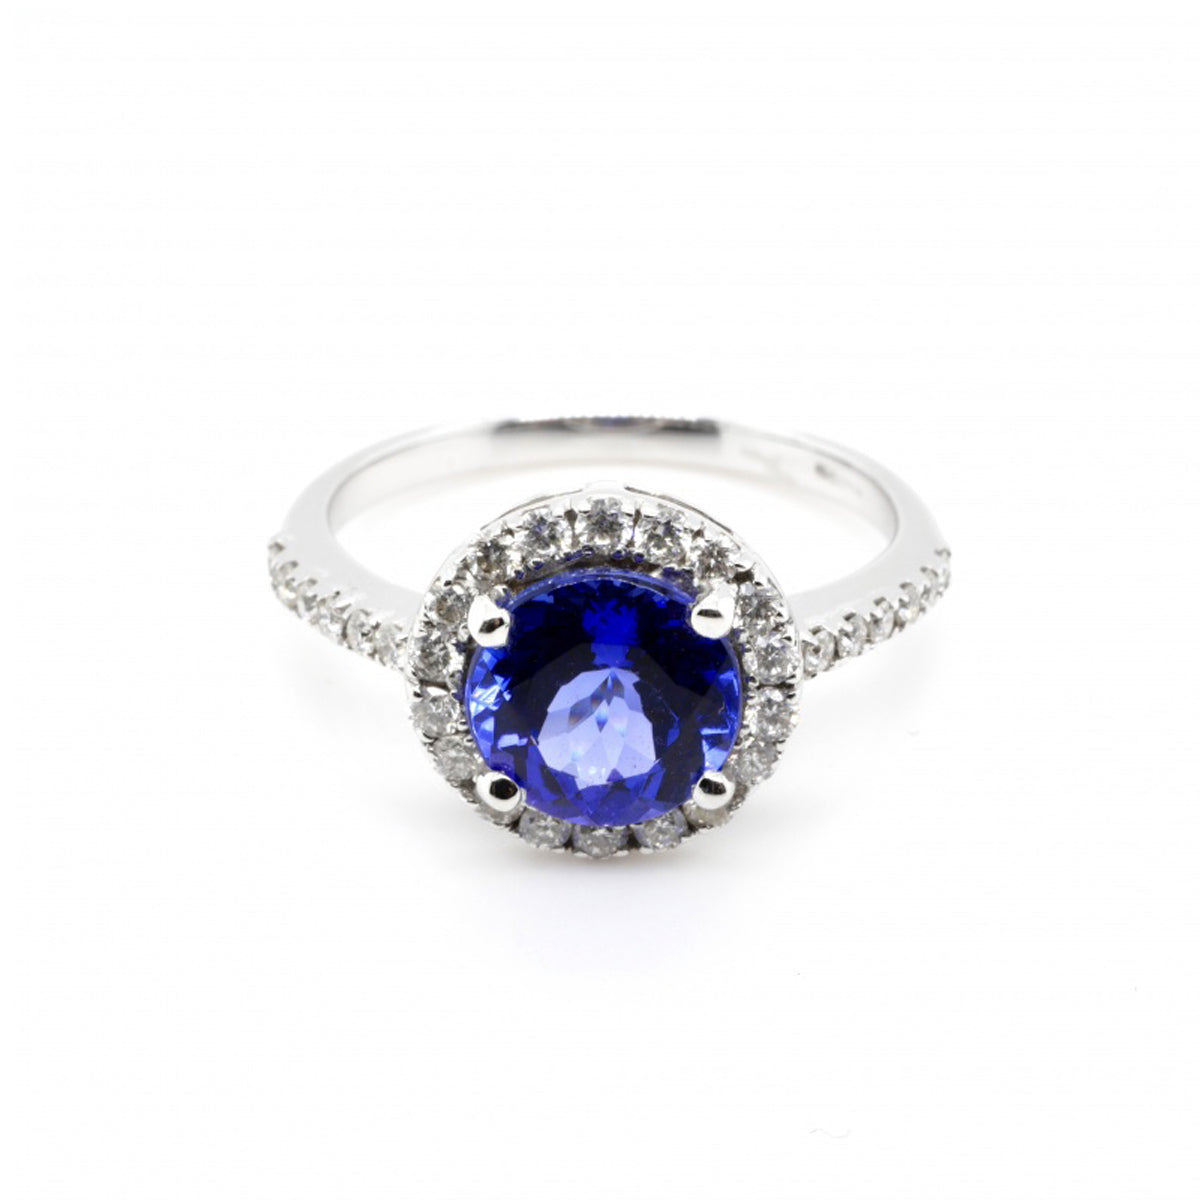 18ct White Gold Diamond Halo & Blue Tanzanite Solitaire Ring - Size N